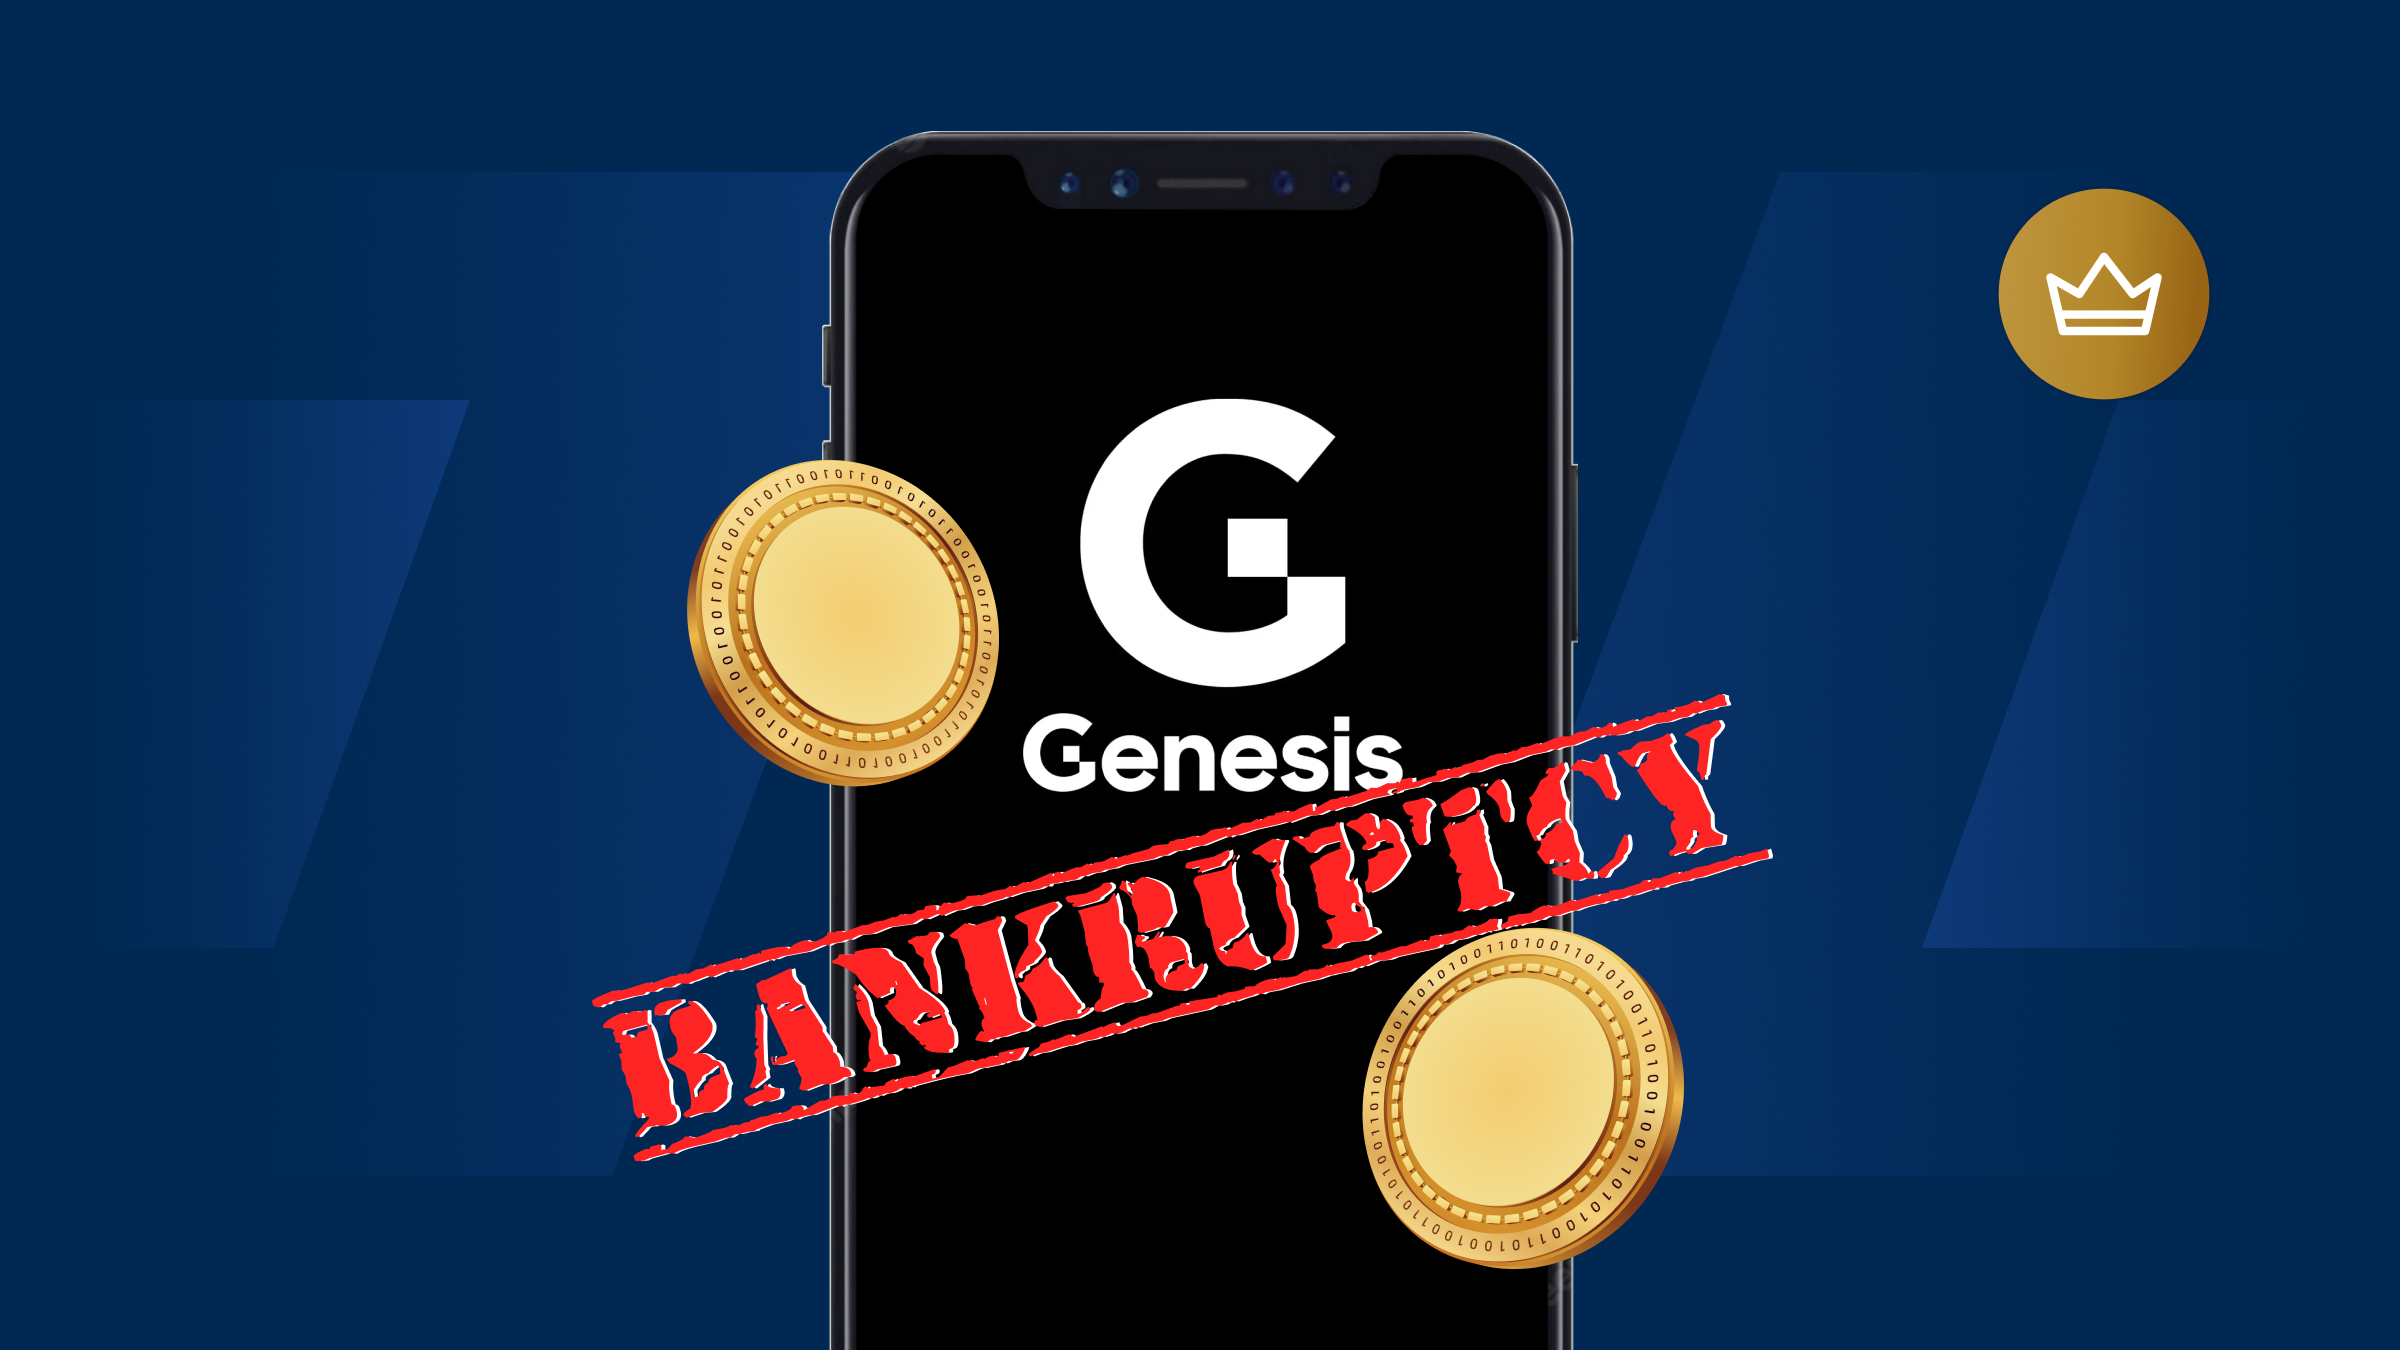 Google's Layoff & Genesis Bankrupcy